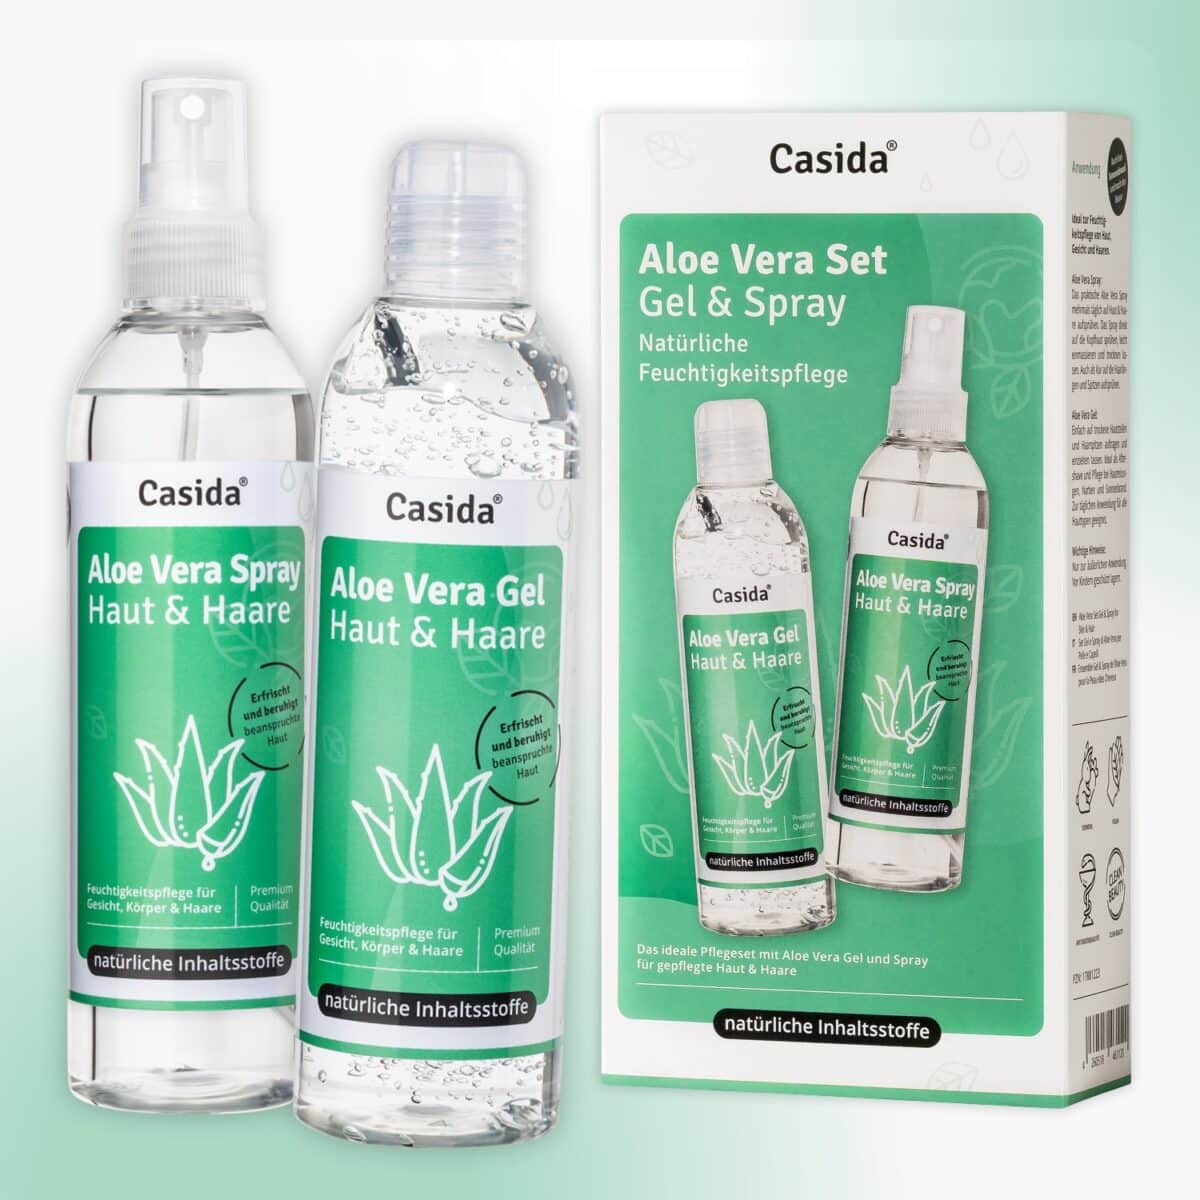 Aloe Vera Set Gel & Spray